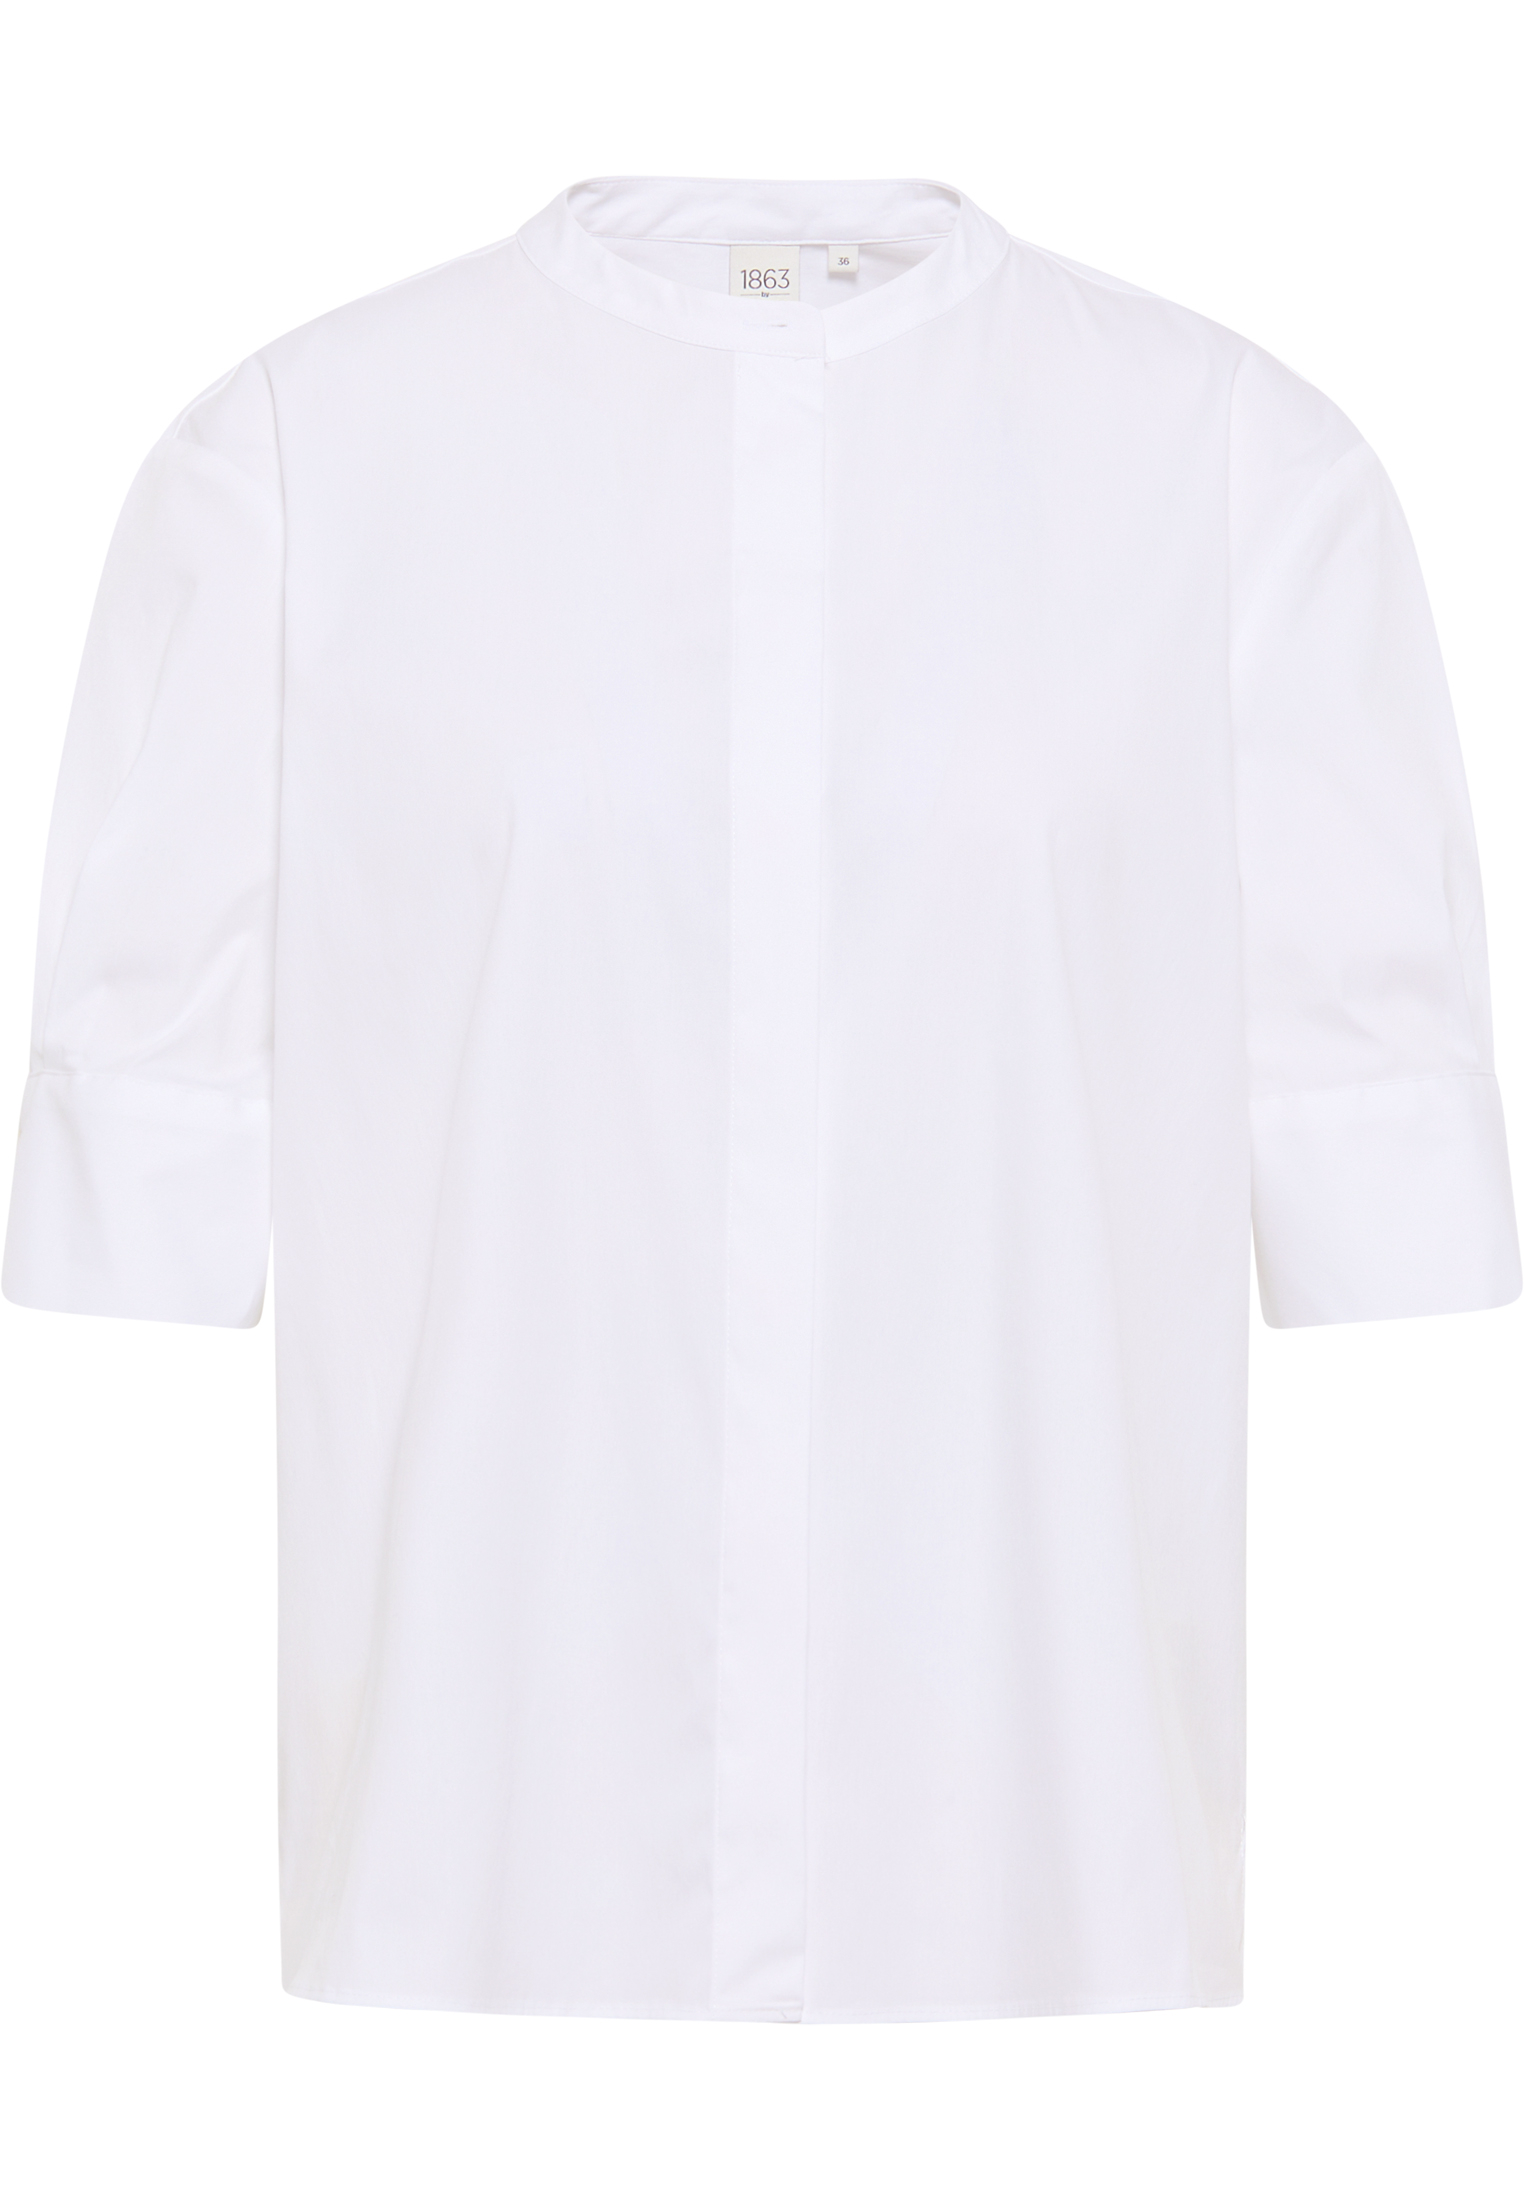 Signature Shirt in white plain